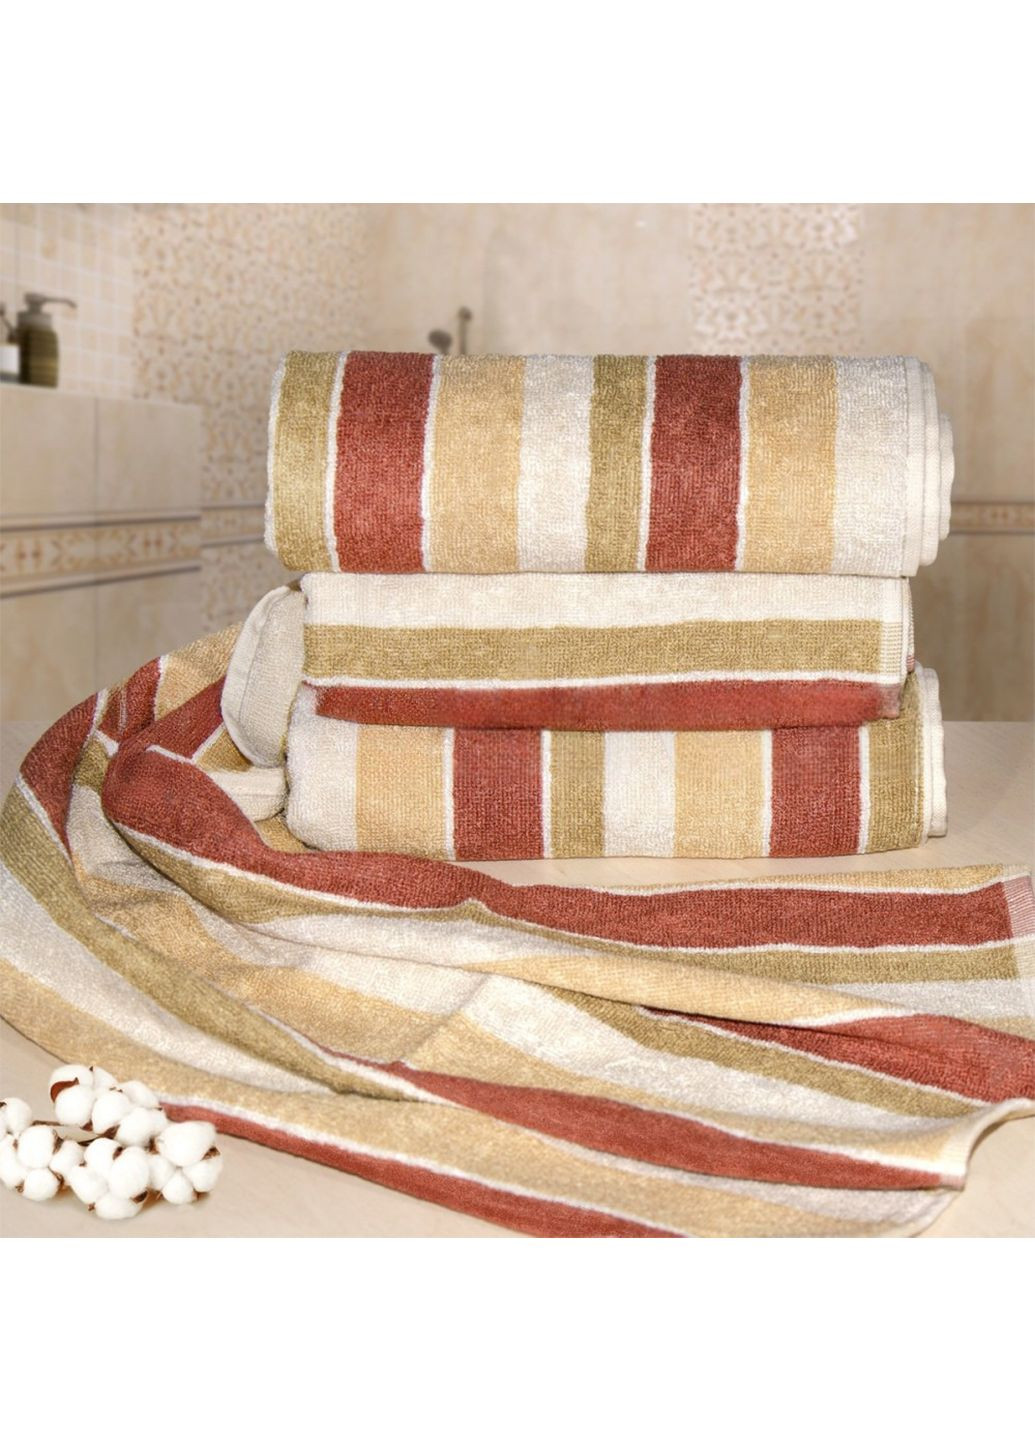 Ярослав полотенце махровое "бамбук" 50х90 см. д.34 полоска комбинированный производство - Украина